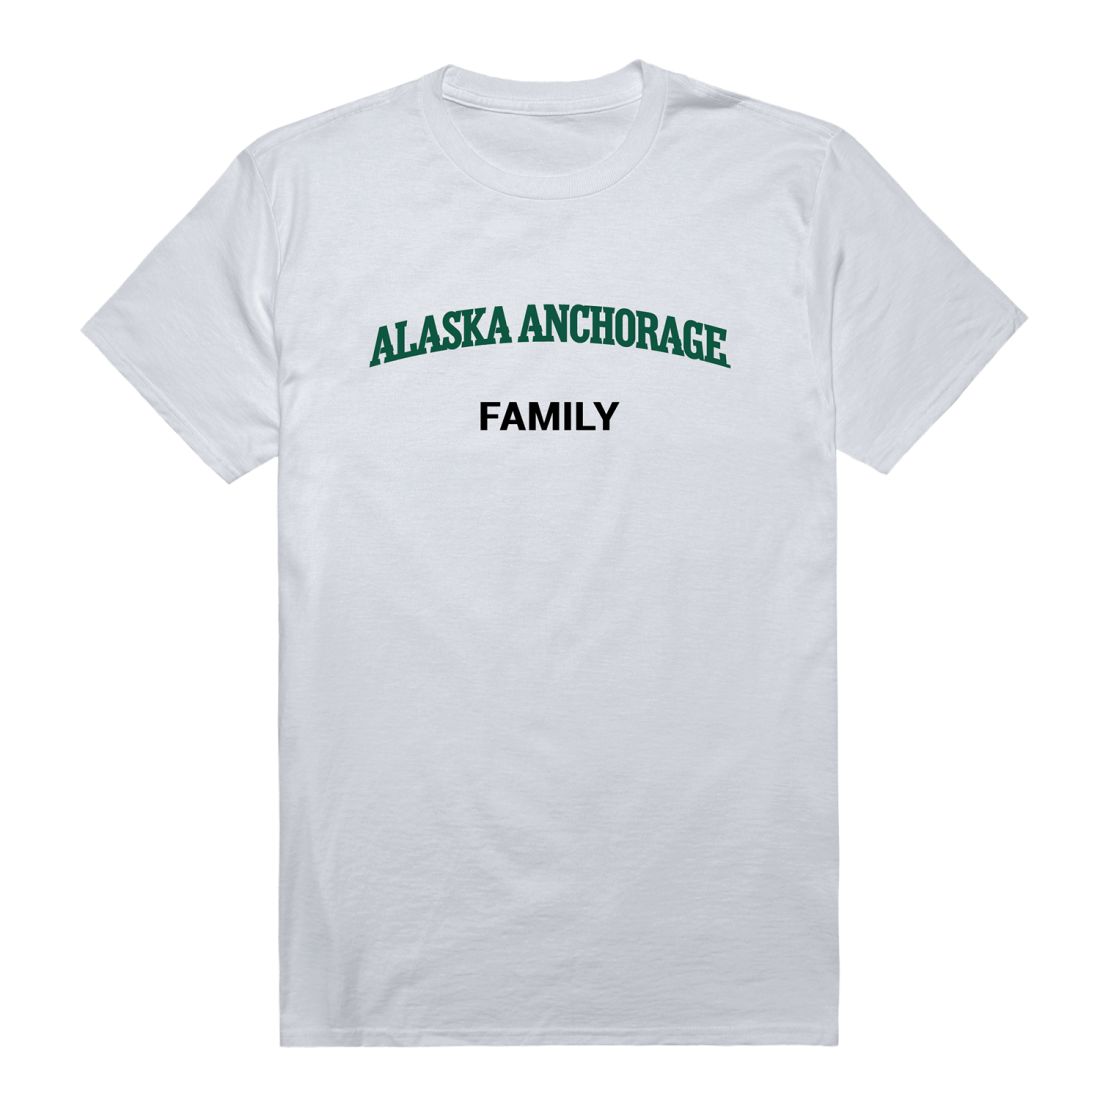 UAA University of Alaska Anchorage Sea Wolves Family T-Shirt